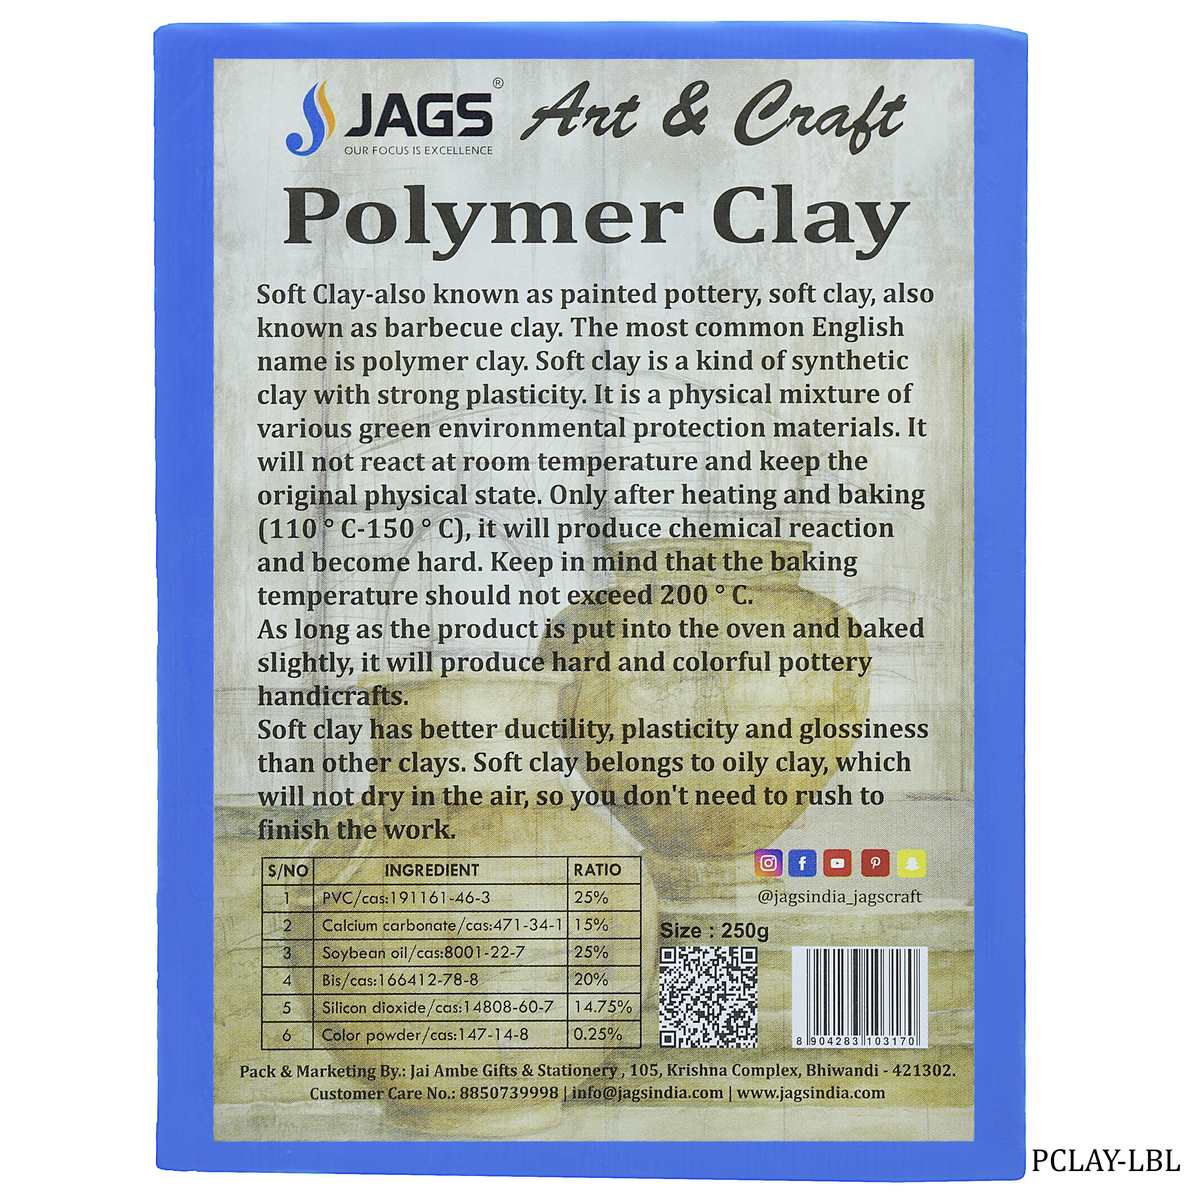 jags-mumbai Clay Polymer Clay 250gm Light Blue PCLAY-LBL